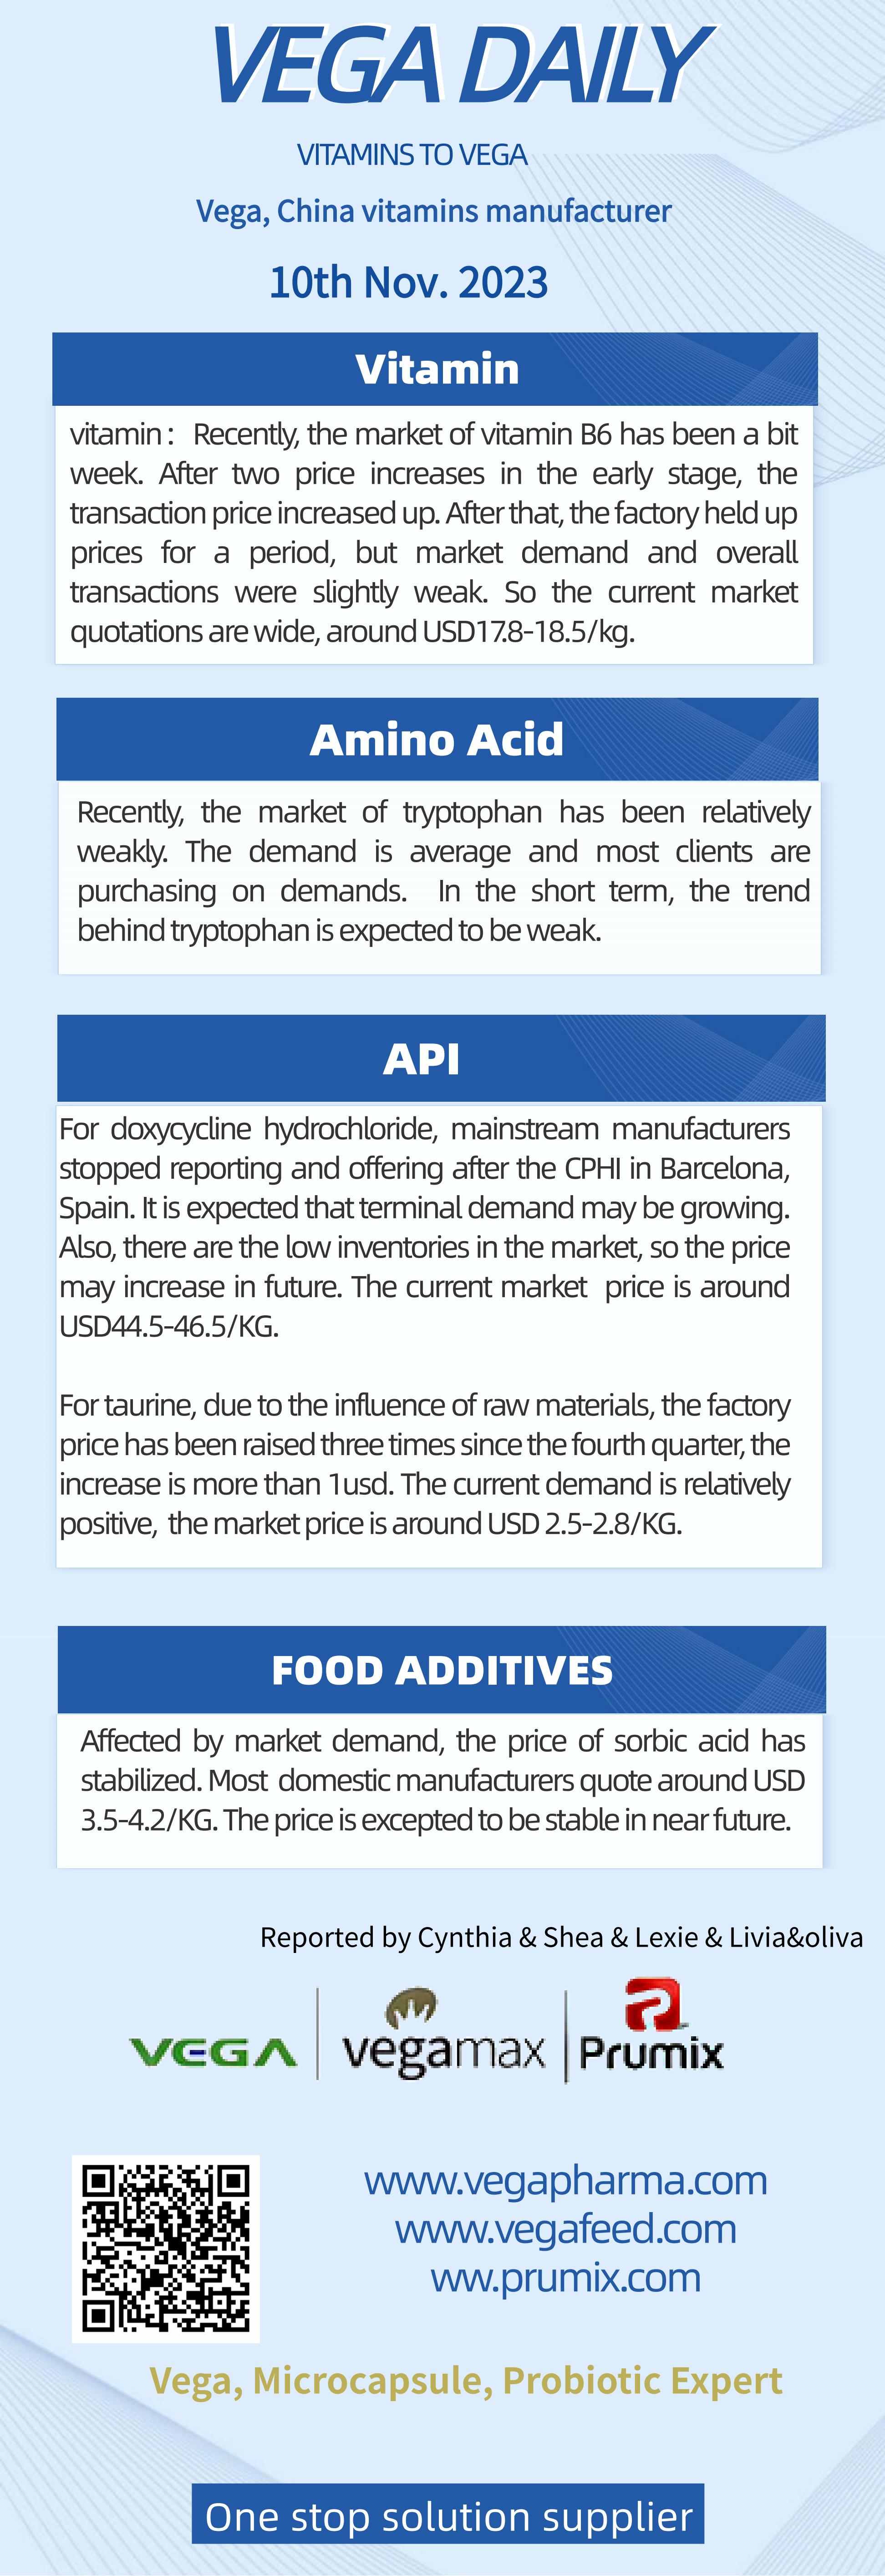 Vega Daily Dated on Nov 10th 2023 Vitamin   Amino Acid API Food Additives.jpg